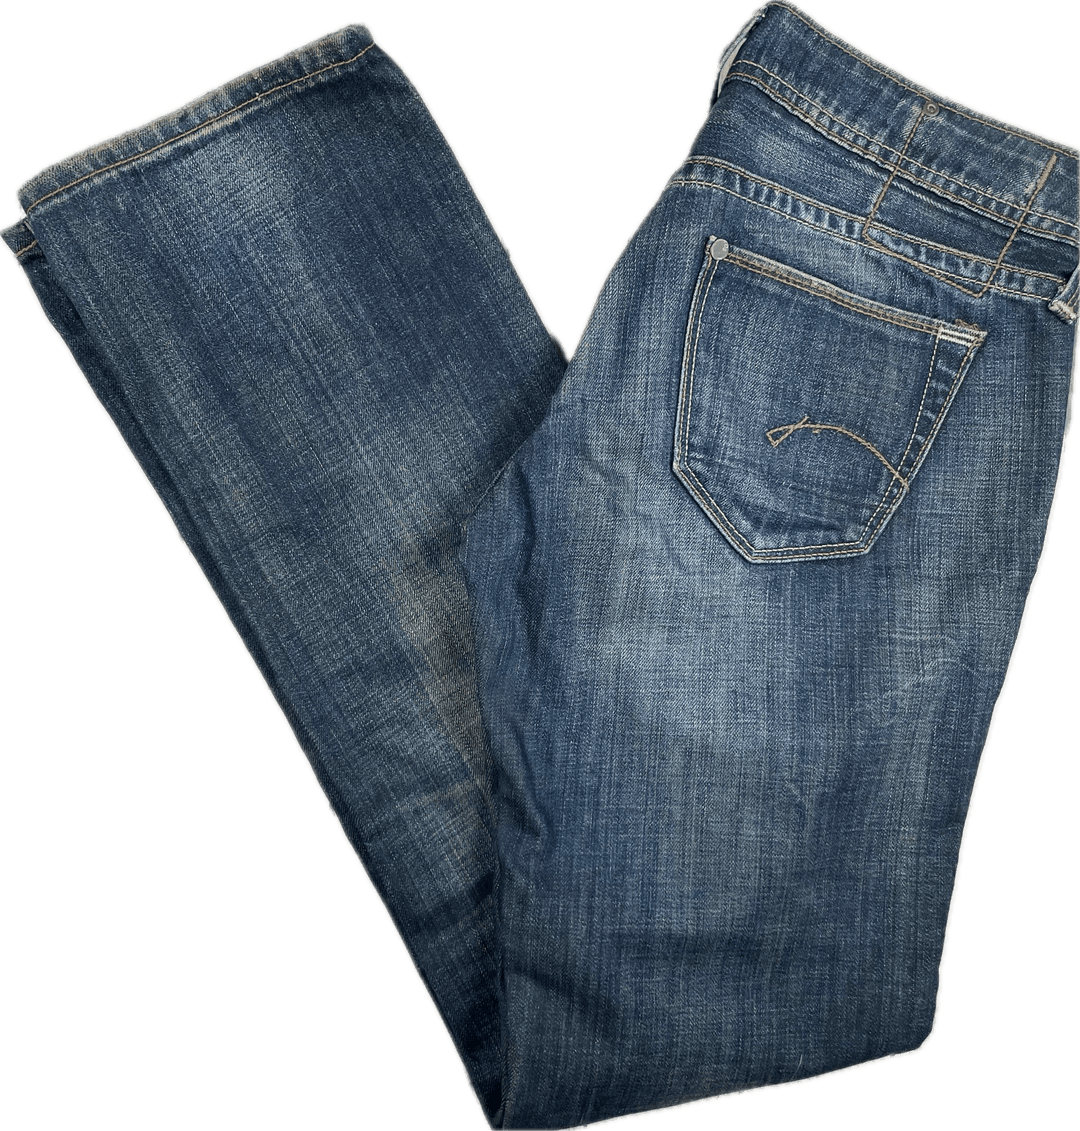 G Star RAW Womens 'Core Straight' Denim Jeans -Size 27 - Jean Pool